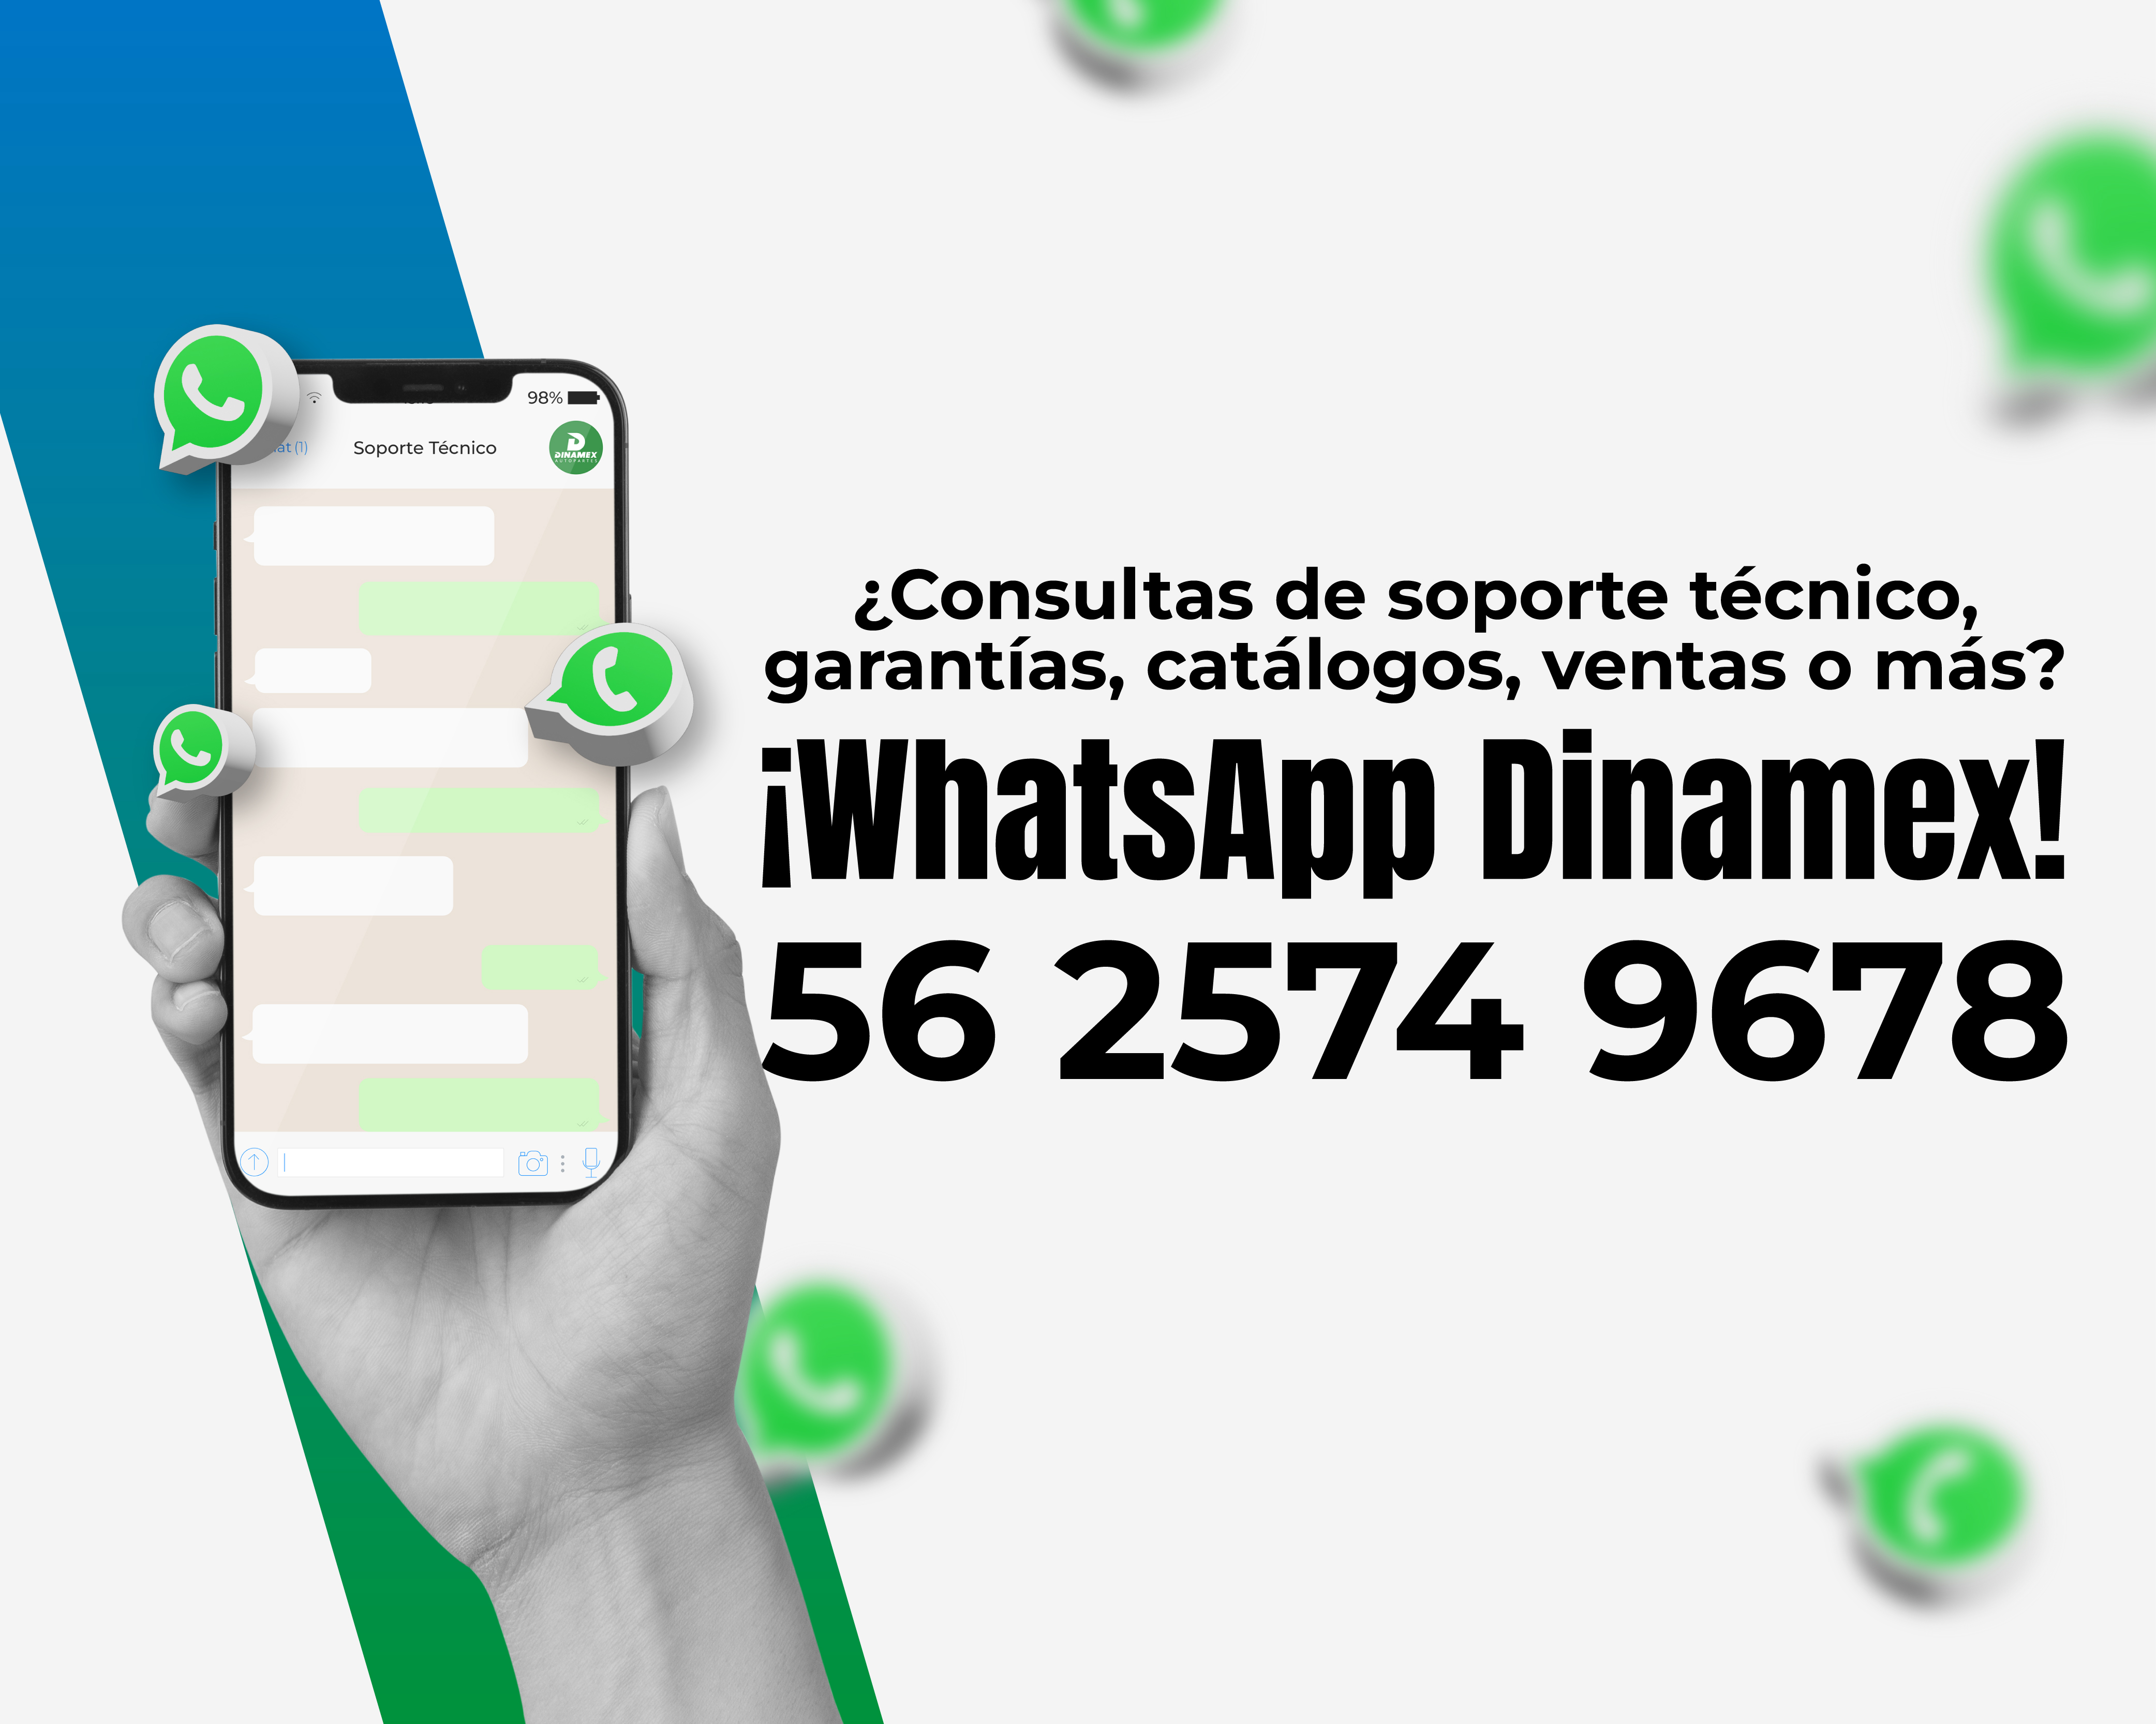 Whatsapp dinamex 56 2574 9678